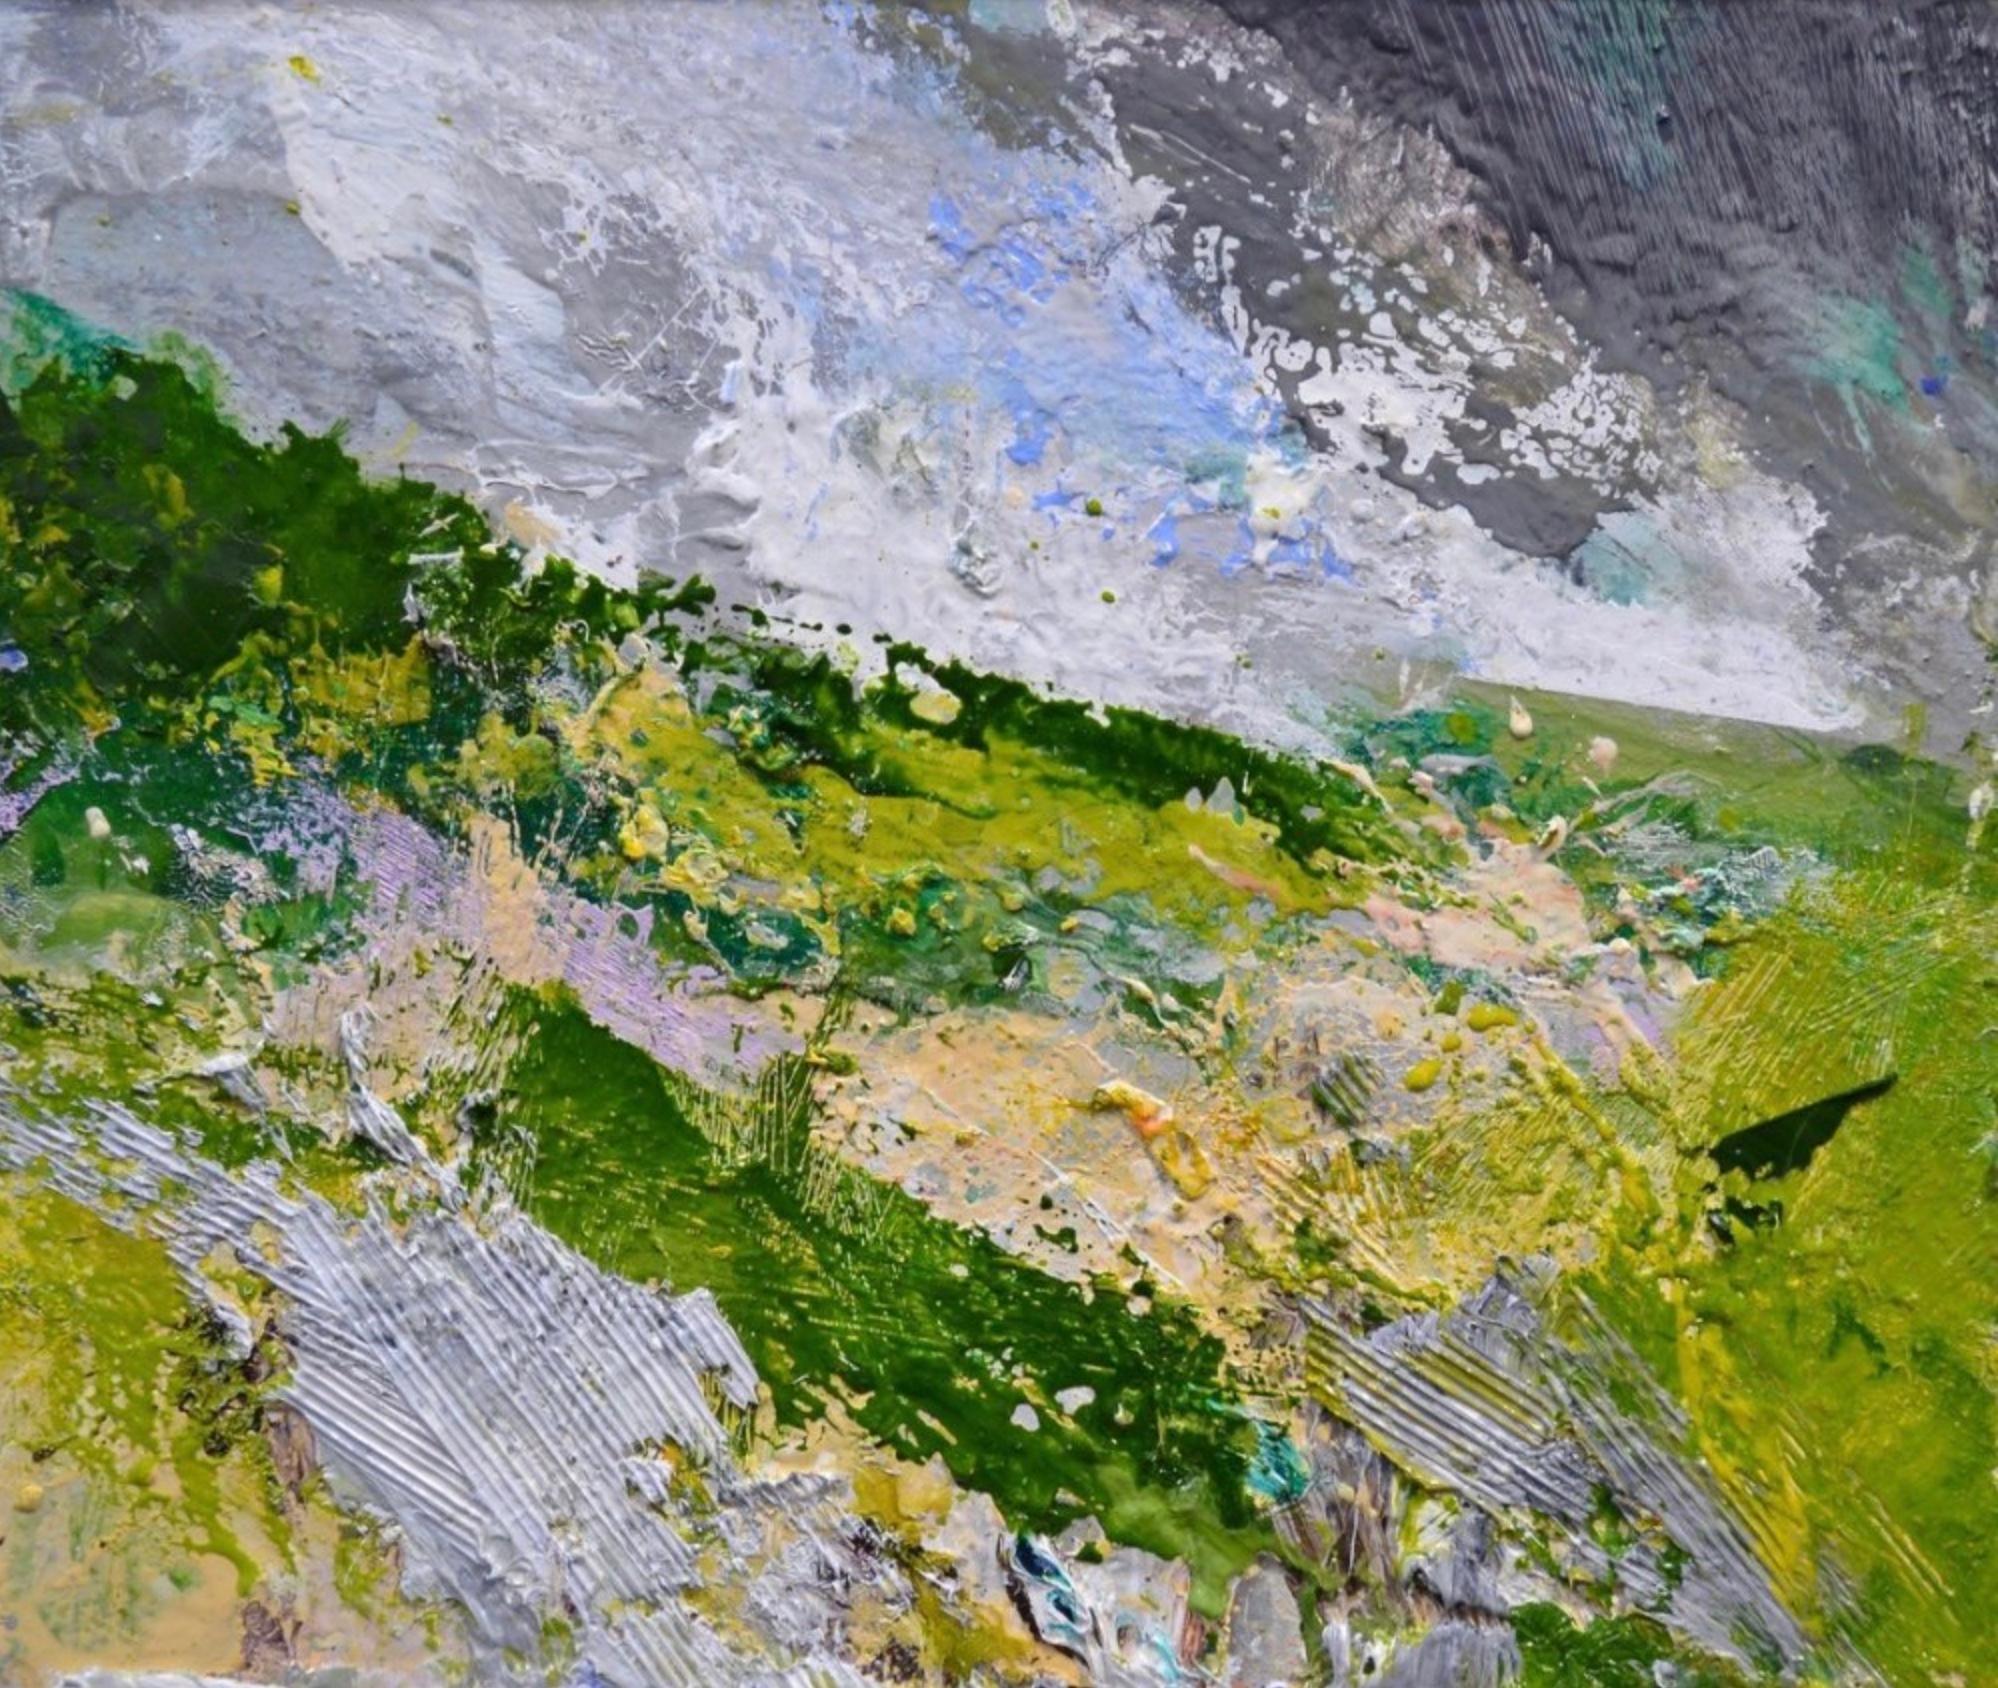 Matthew Bourne  Abstract Painting – Grasland, Felsen, Regenschauer